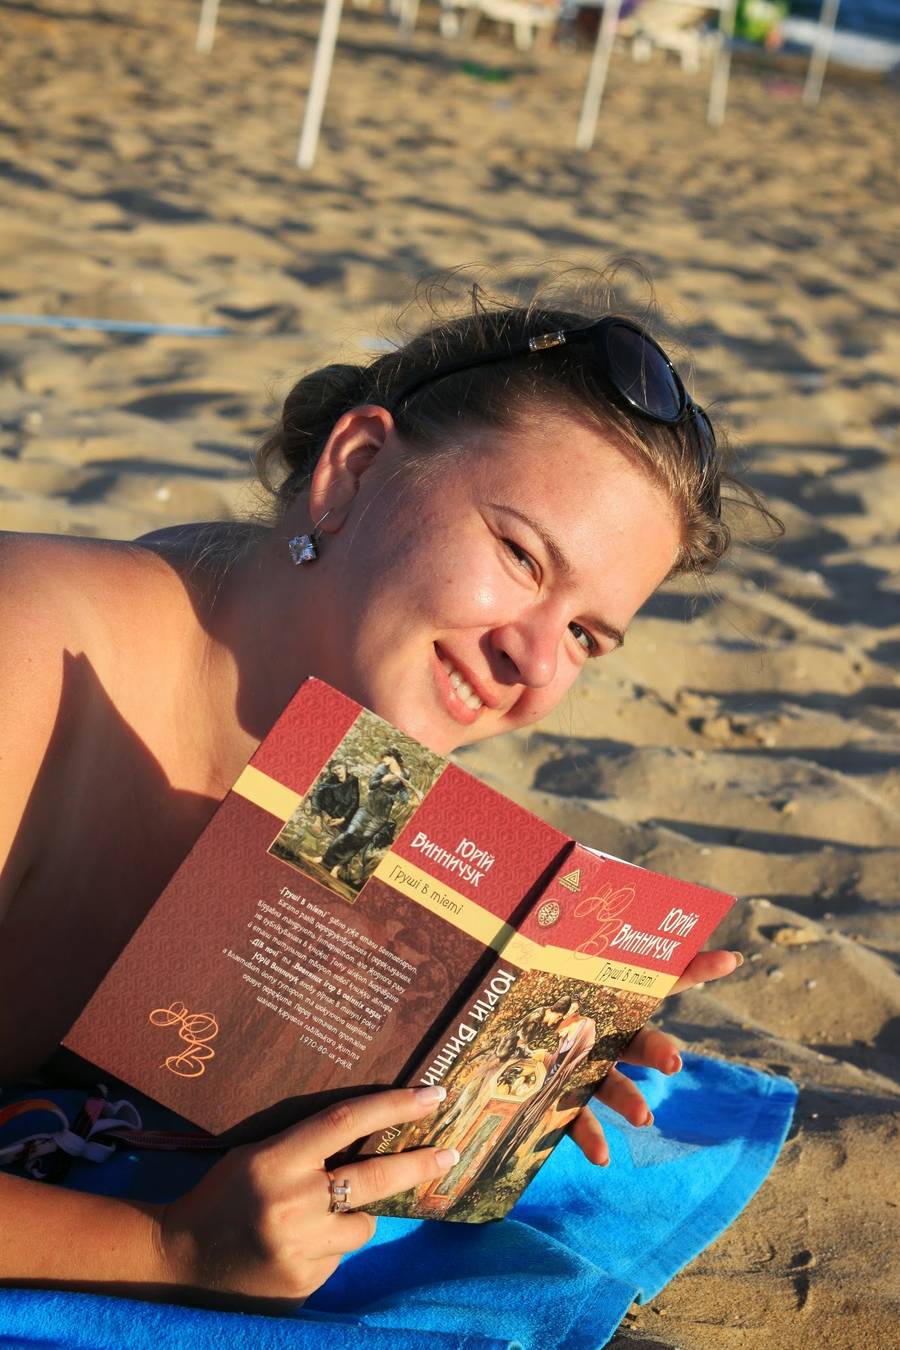 I read books on the beach